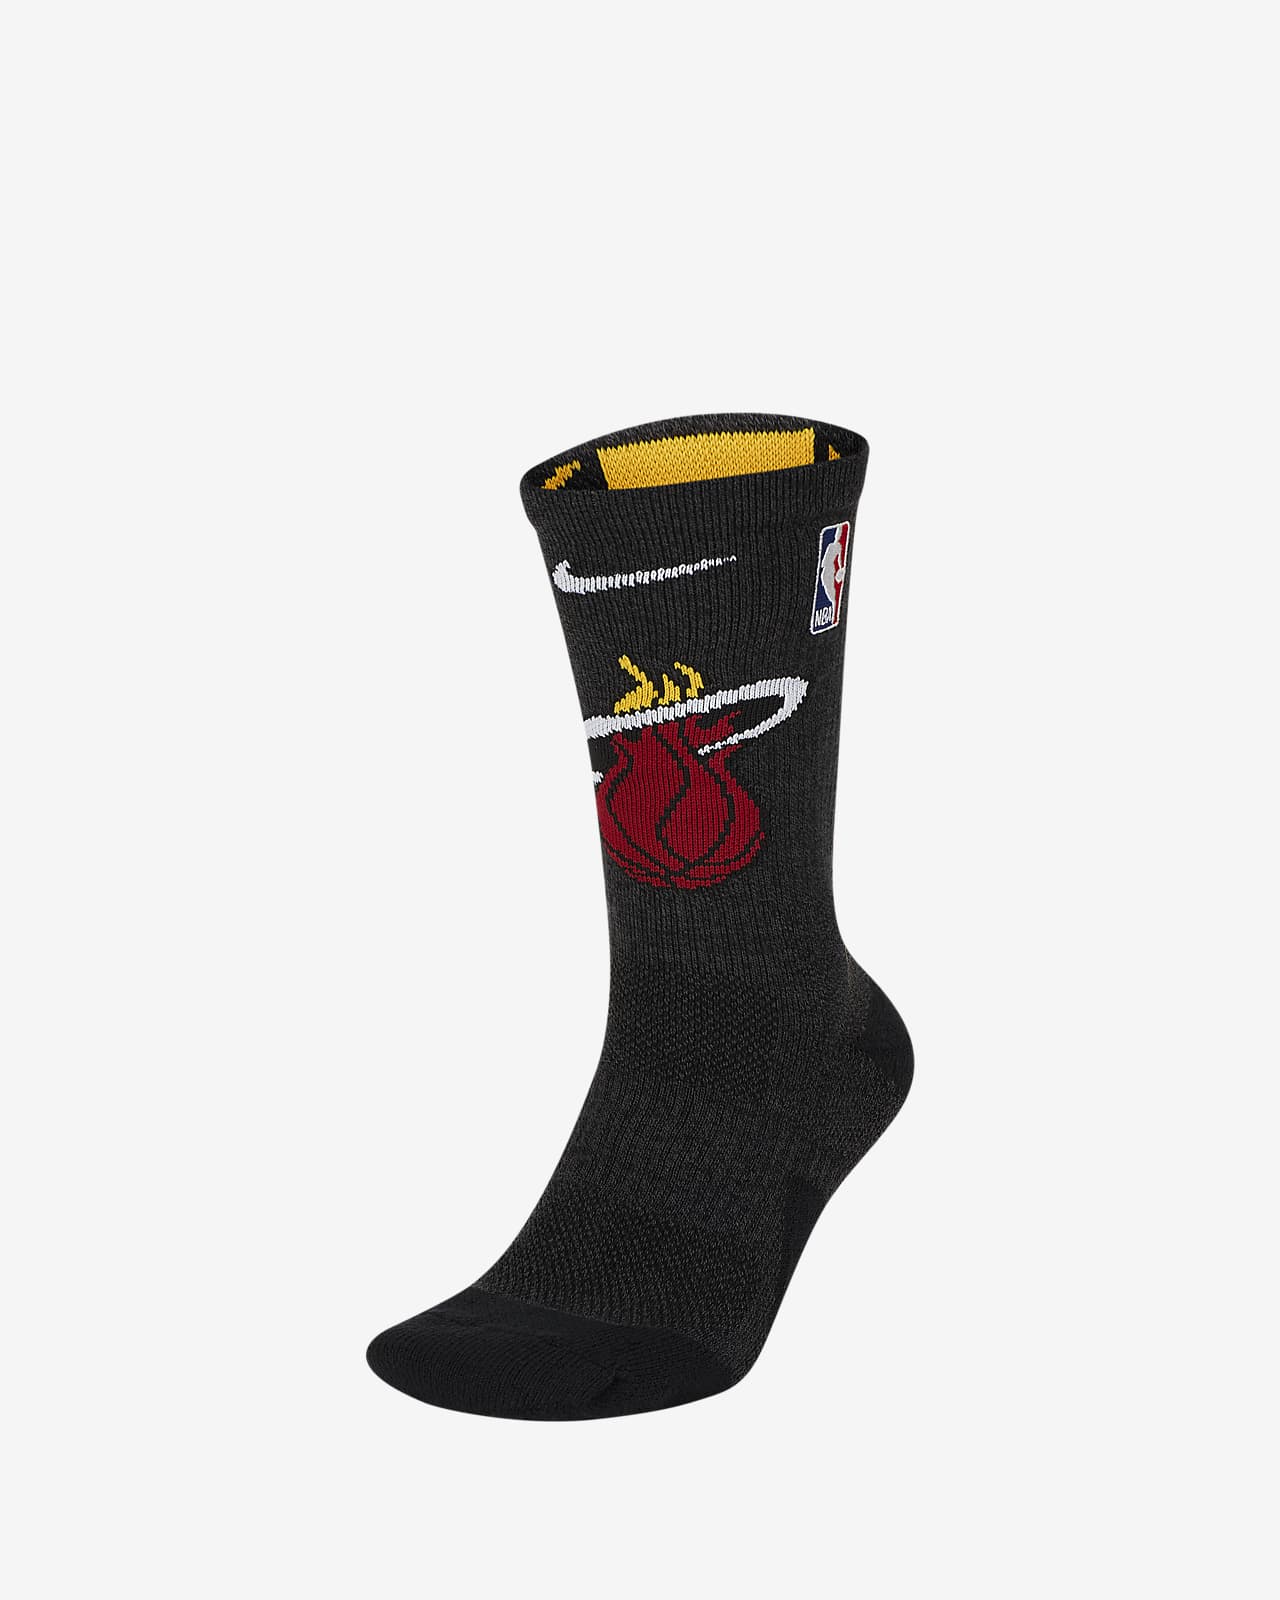 Miami Heat Elite Nike NBA Crew Socks.